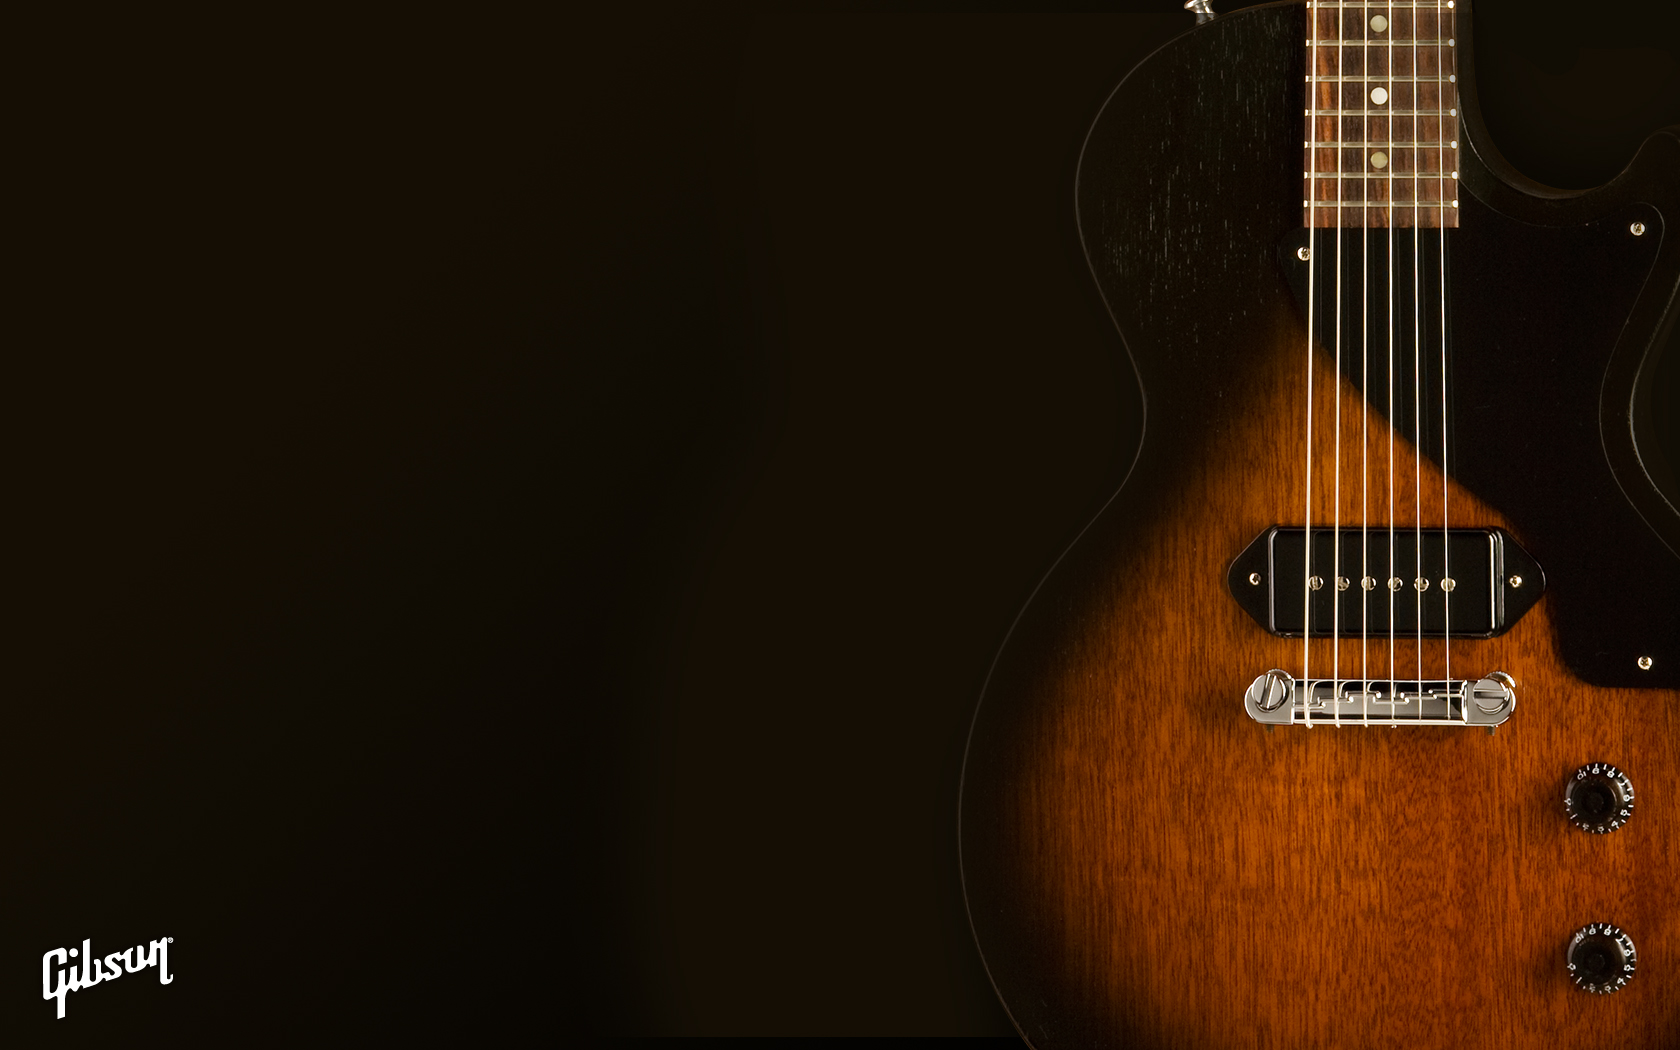 gibson fondo de pantalla para iphone,guitarra,instrumento musical,instrumentos de cuerda pulsada,guitarra acustica,guitarra eléctrica